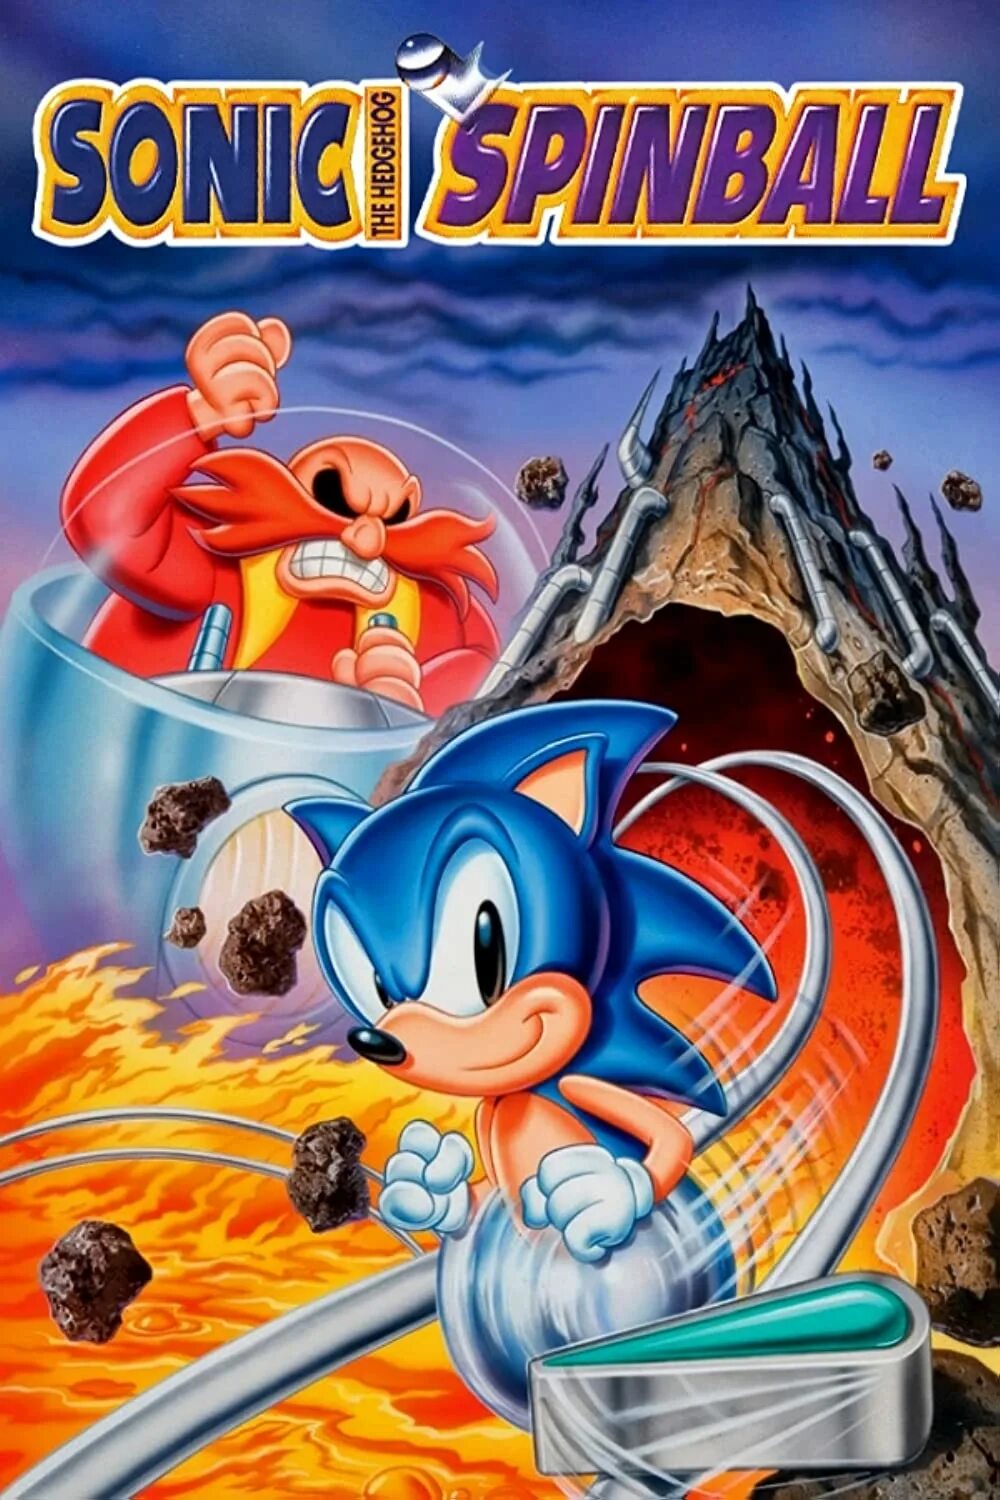 Sonic на сеге. Sonic 1993 игры. Соник игра сега. Sonic the Hedgehog Spinball. Sonic the Hedgehog Spinball игра.